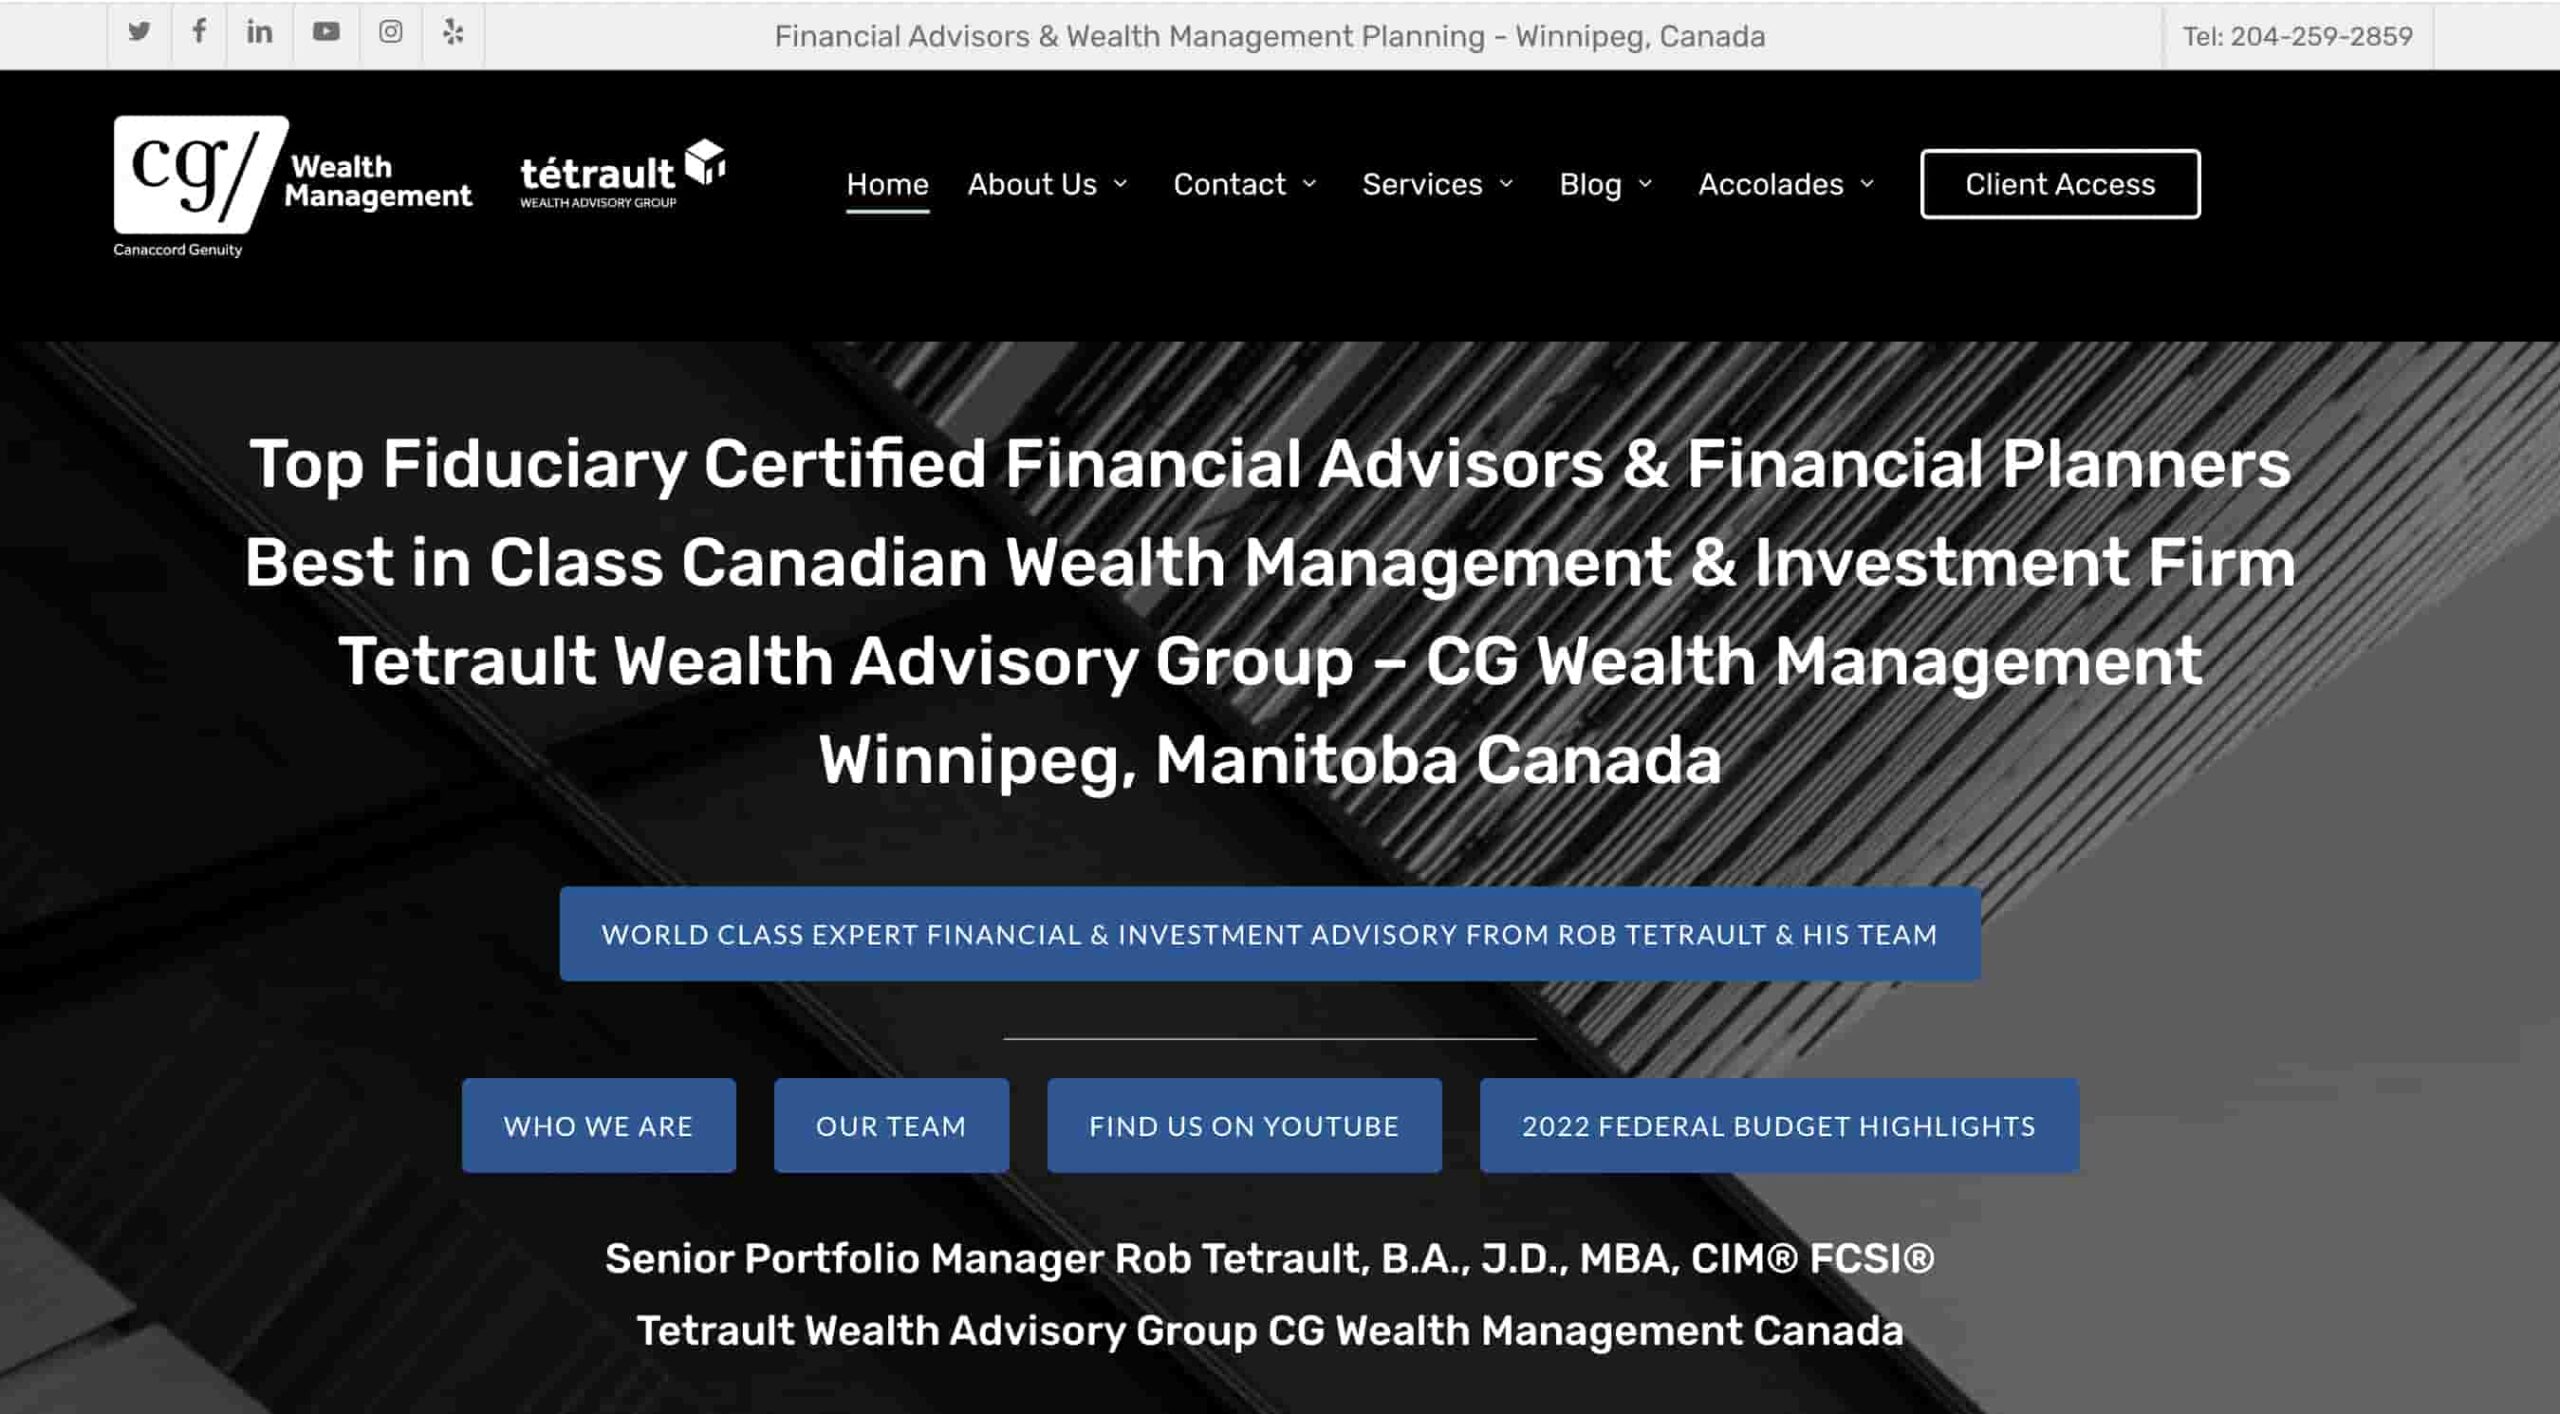 Tetrault Wealth Advisory Group